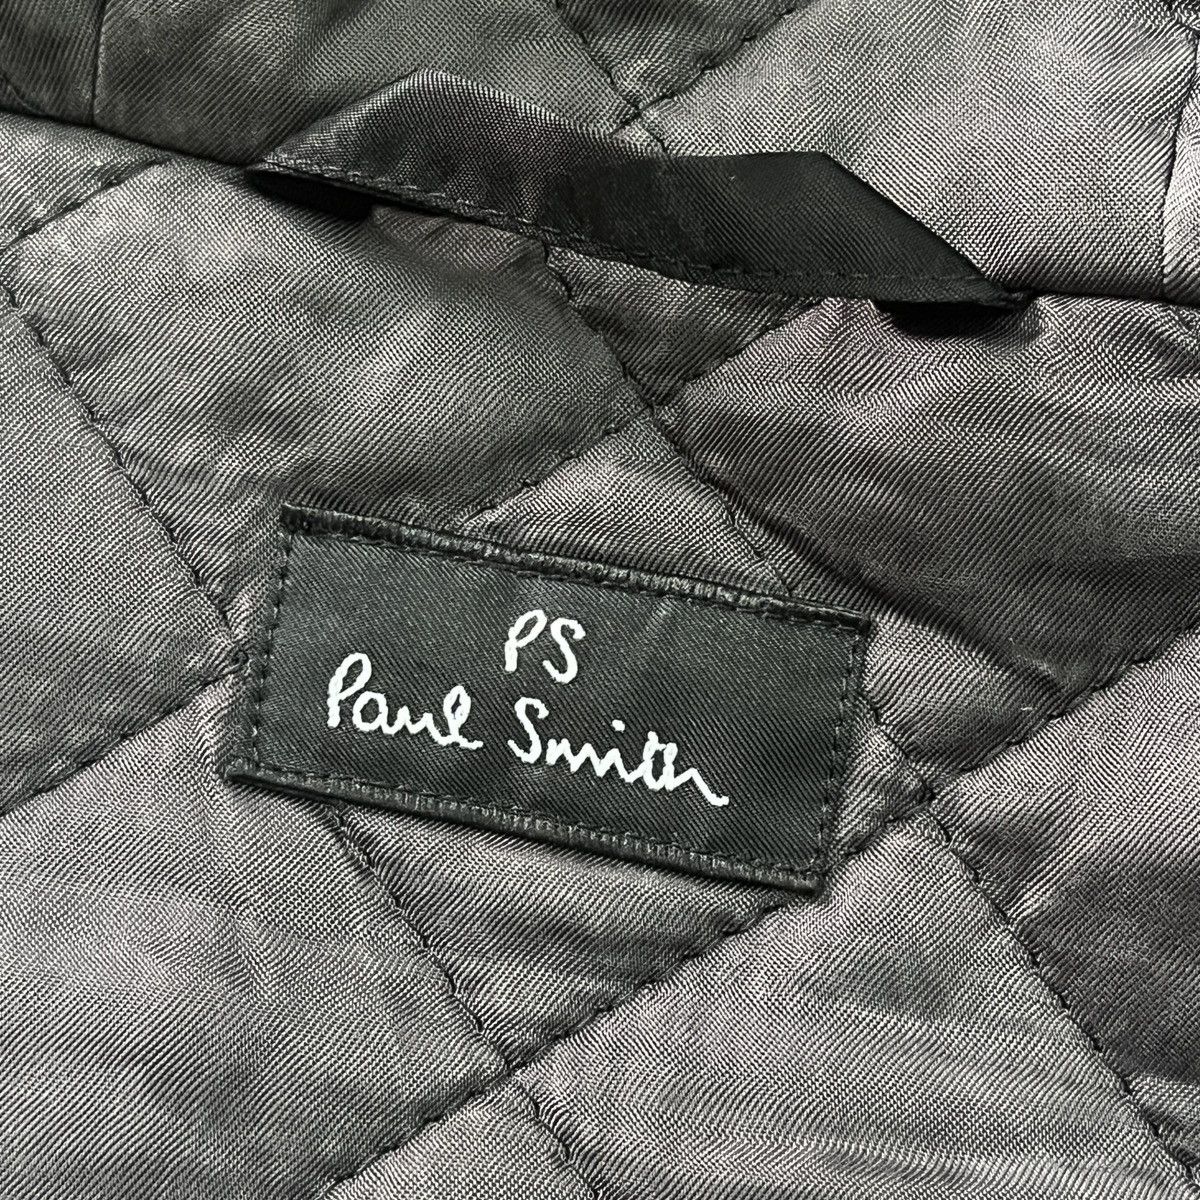 Vintage - Paul Smith Nylon Parkas Long Jacket - 5